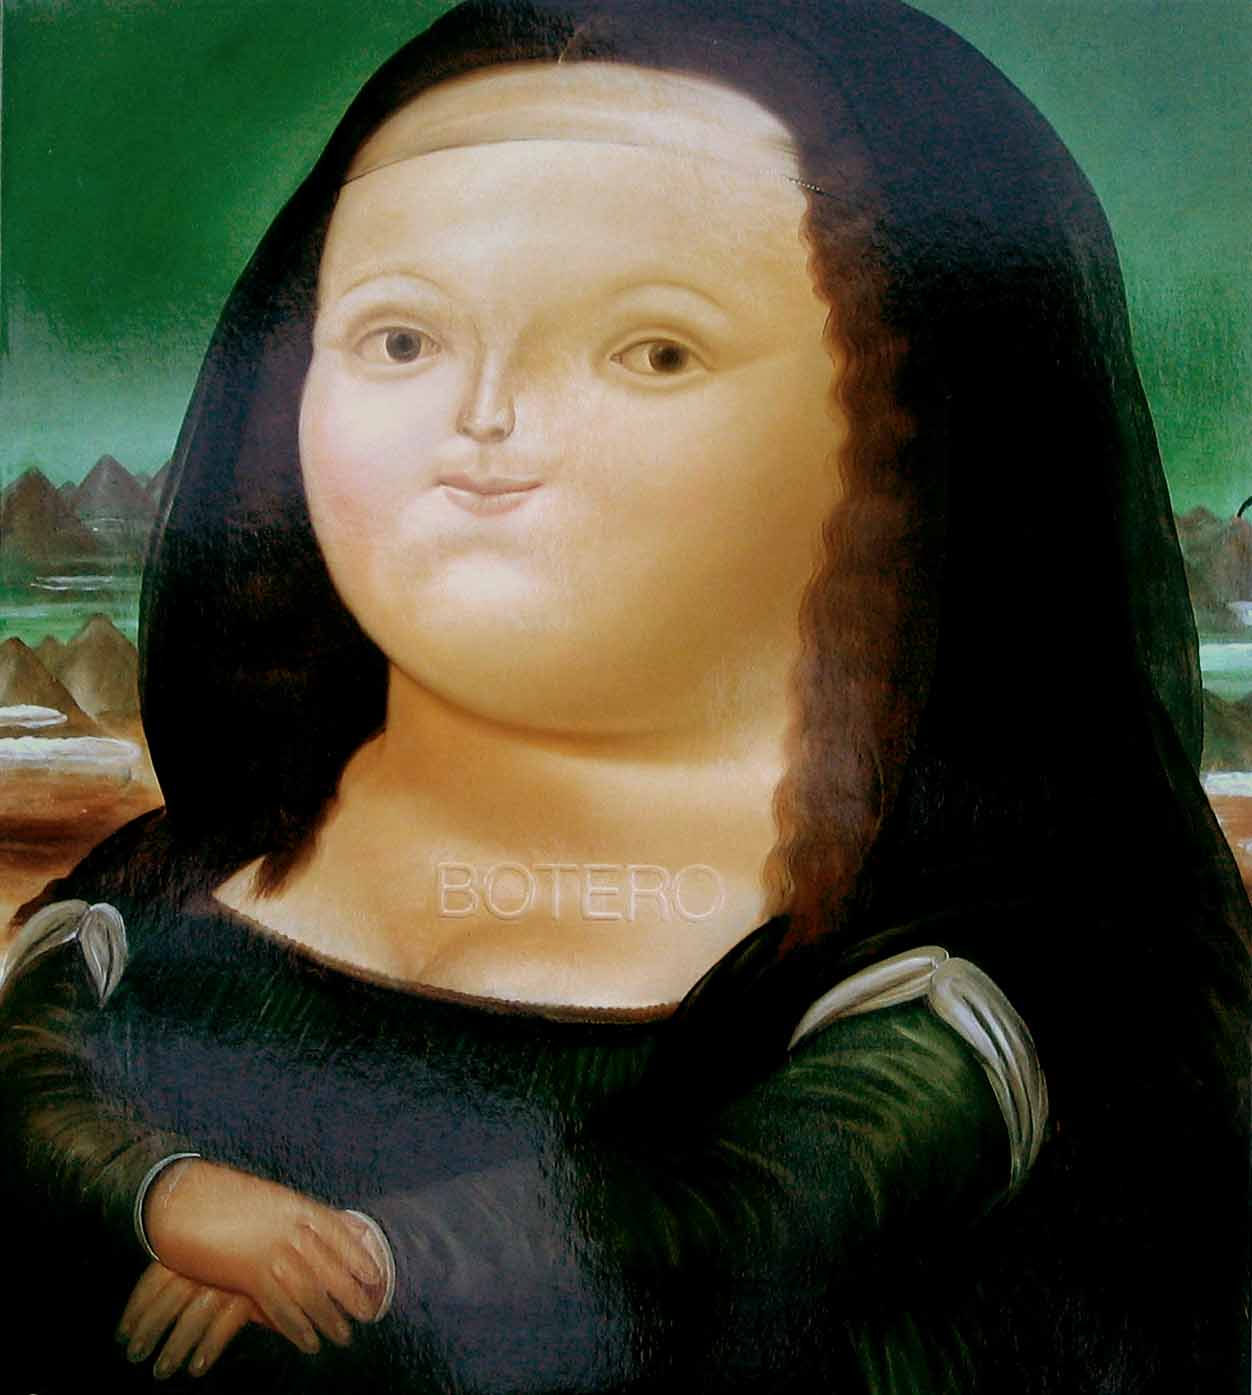 https://blogger.googleusercontent.com/img/b/R29vZ2xl/AVvXsEgGx4yHDAiFFme1LBasI_g-ruiQ2G4a13NzYMjLwxUDFvt8r2BtaptlN3r6CgQyhxrevWPij2LRktuxFIKUfiGlHQf9wBjZV3CWTnFGUNwlIVBIzp6viK5jNQcygTn1hLFx9dcSg0jUyAY/s1600/Botero+Mona+Lisa.jpg